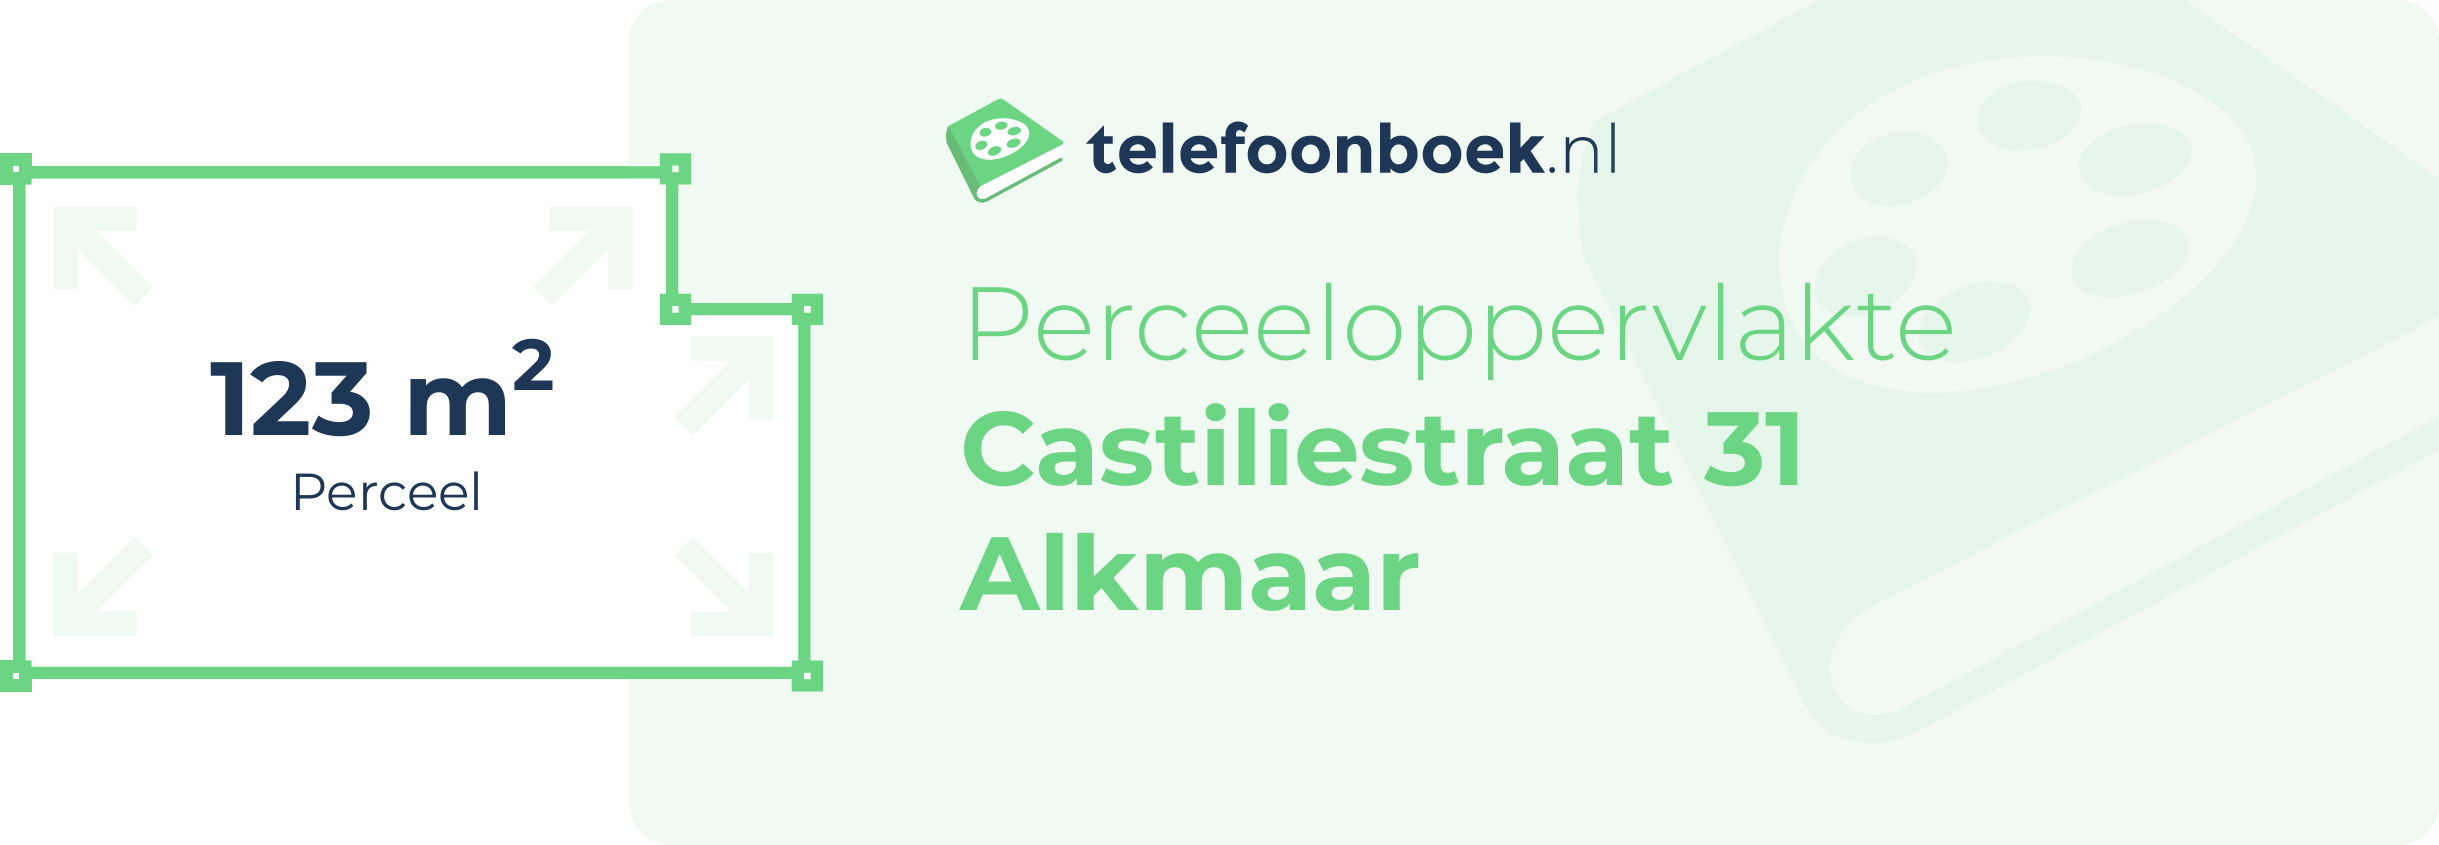 Perceeloppervlakte Castiliestraat 31 Alkmaar